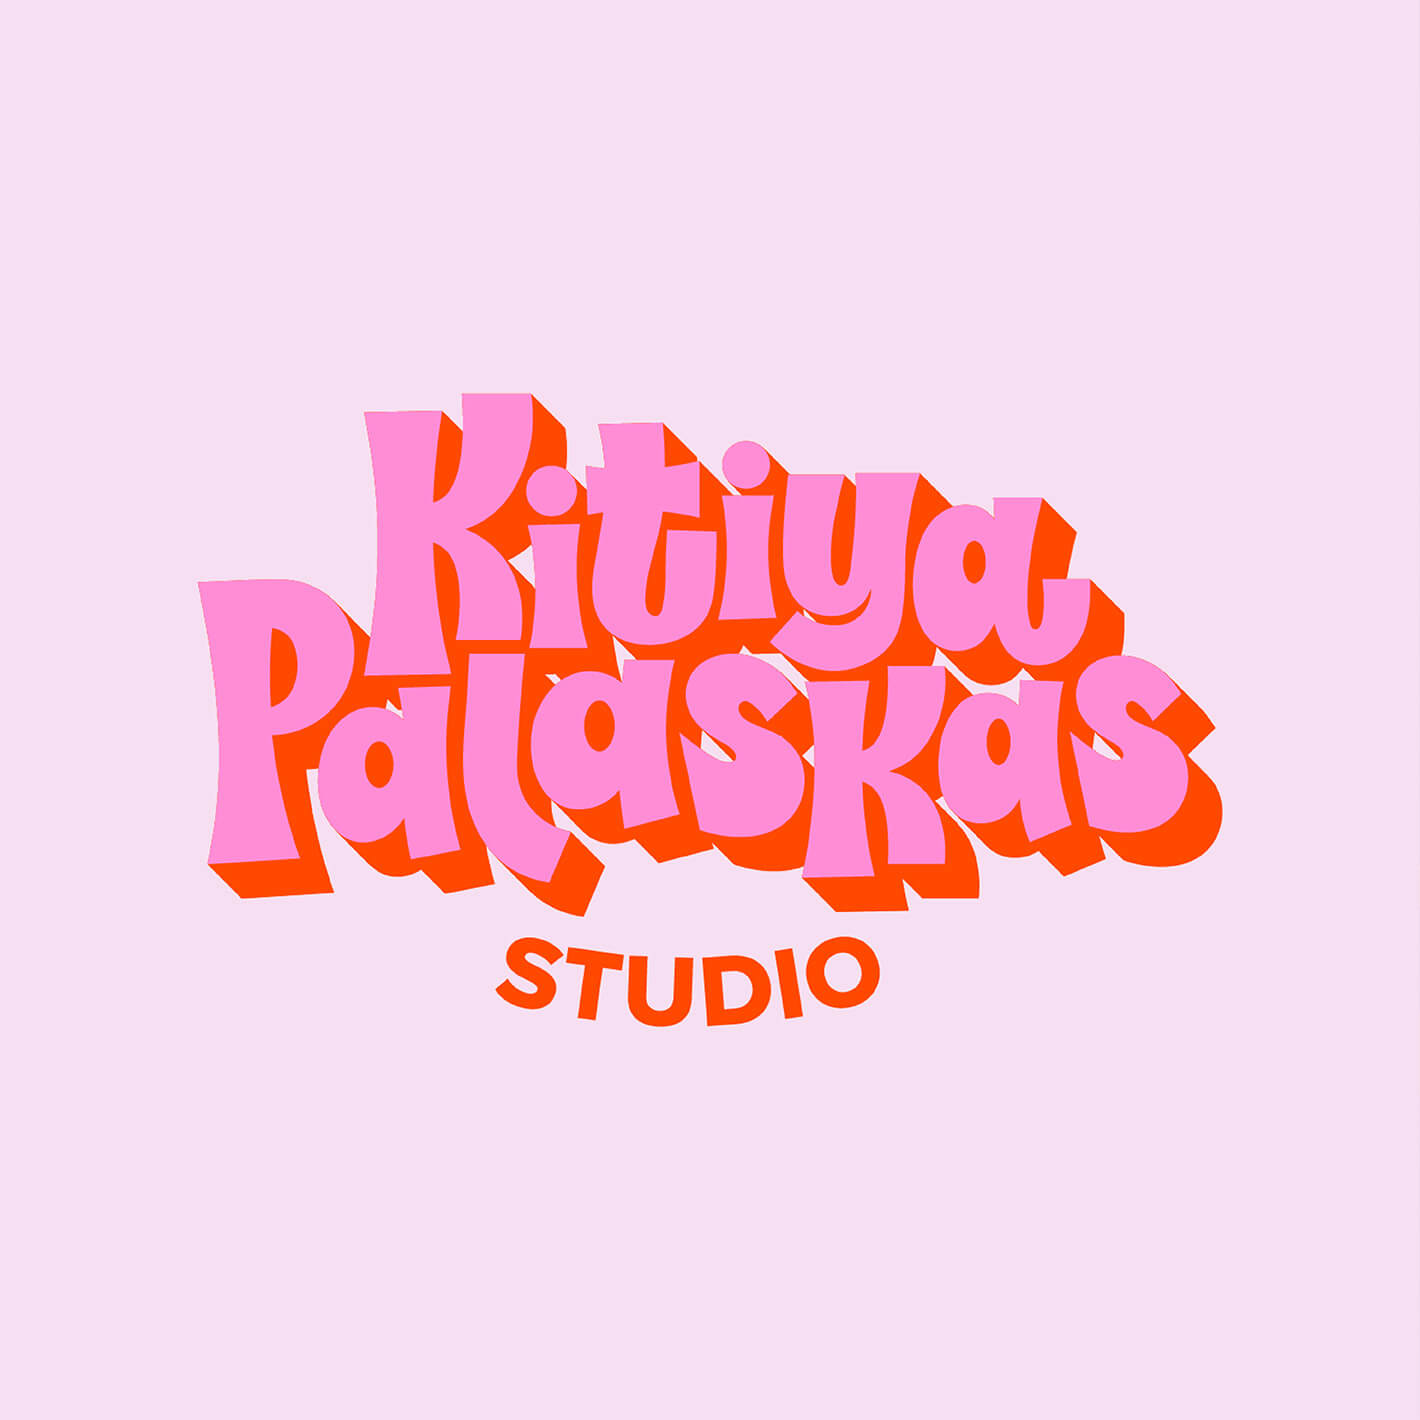 Brand designer portfolio image showing the Kitiya Palaksas studio logo in bright pink and red on a pale pink background.